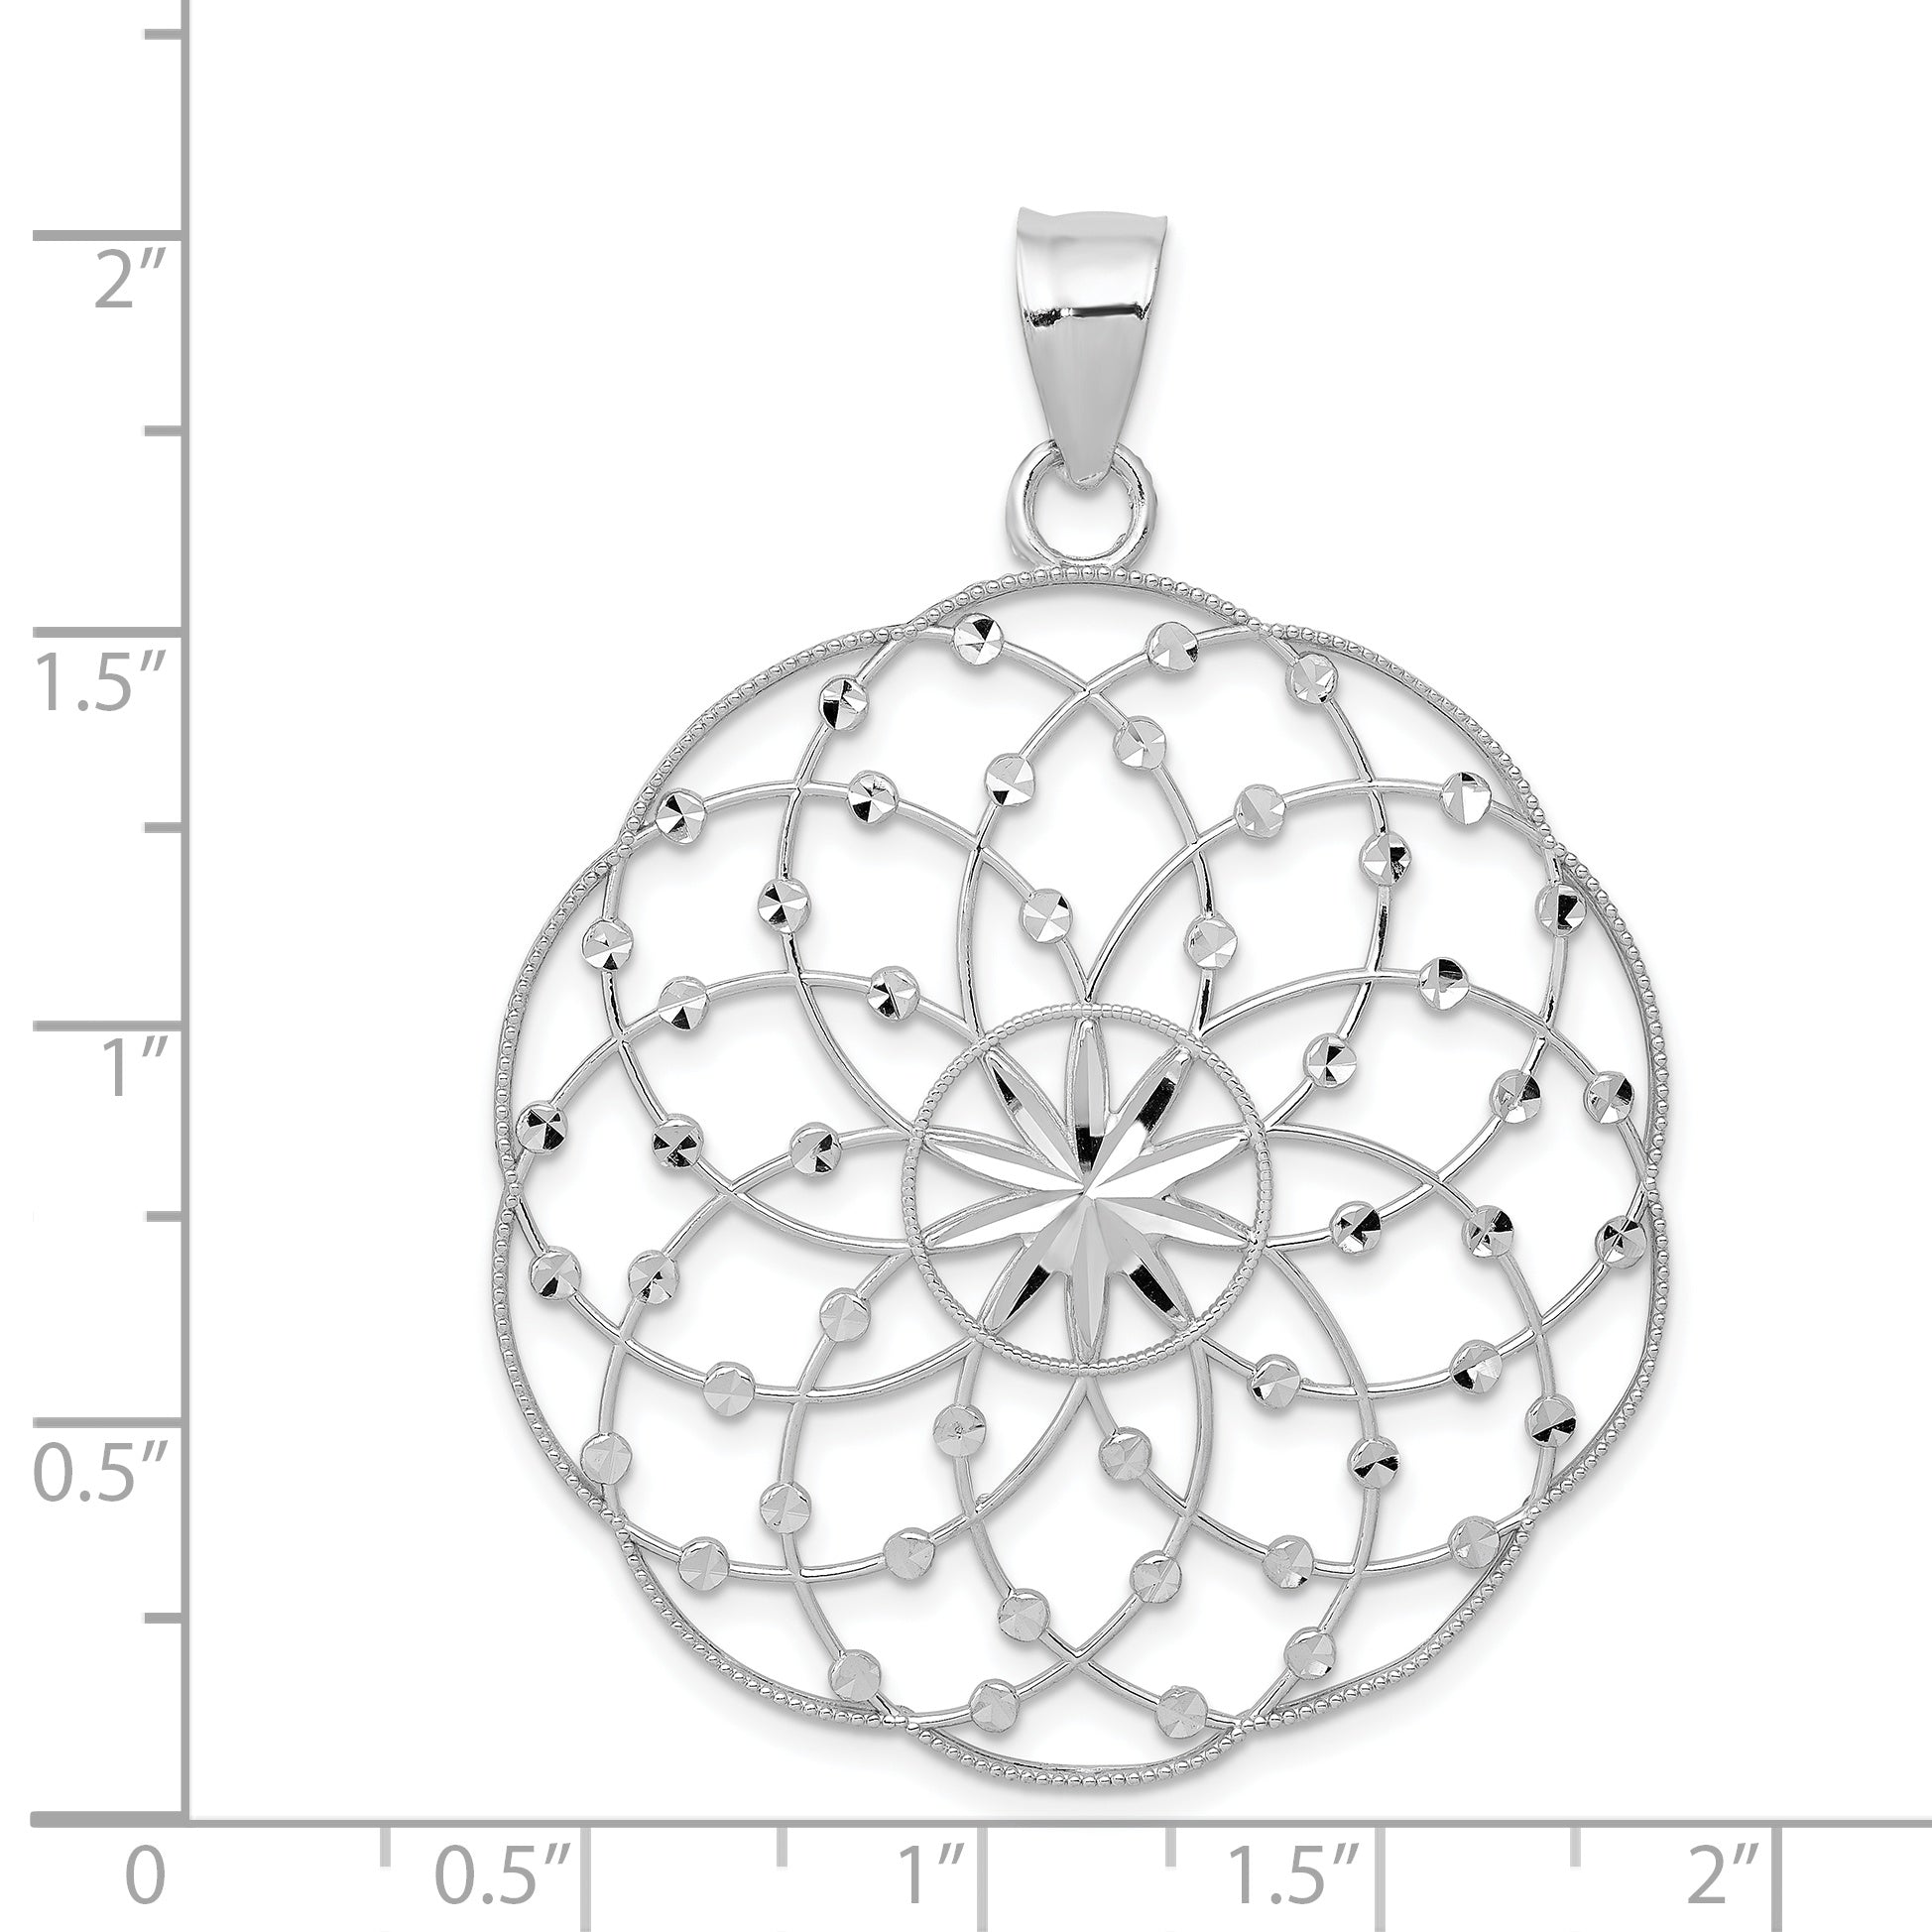 14k White Gold Diamond Cut Sphere Pendant